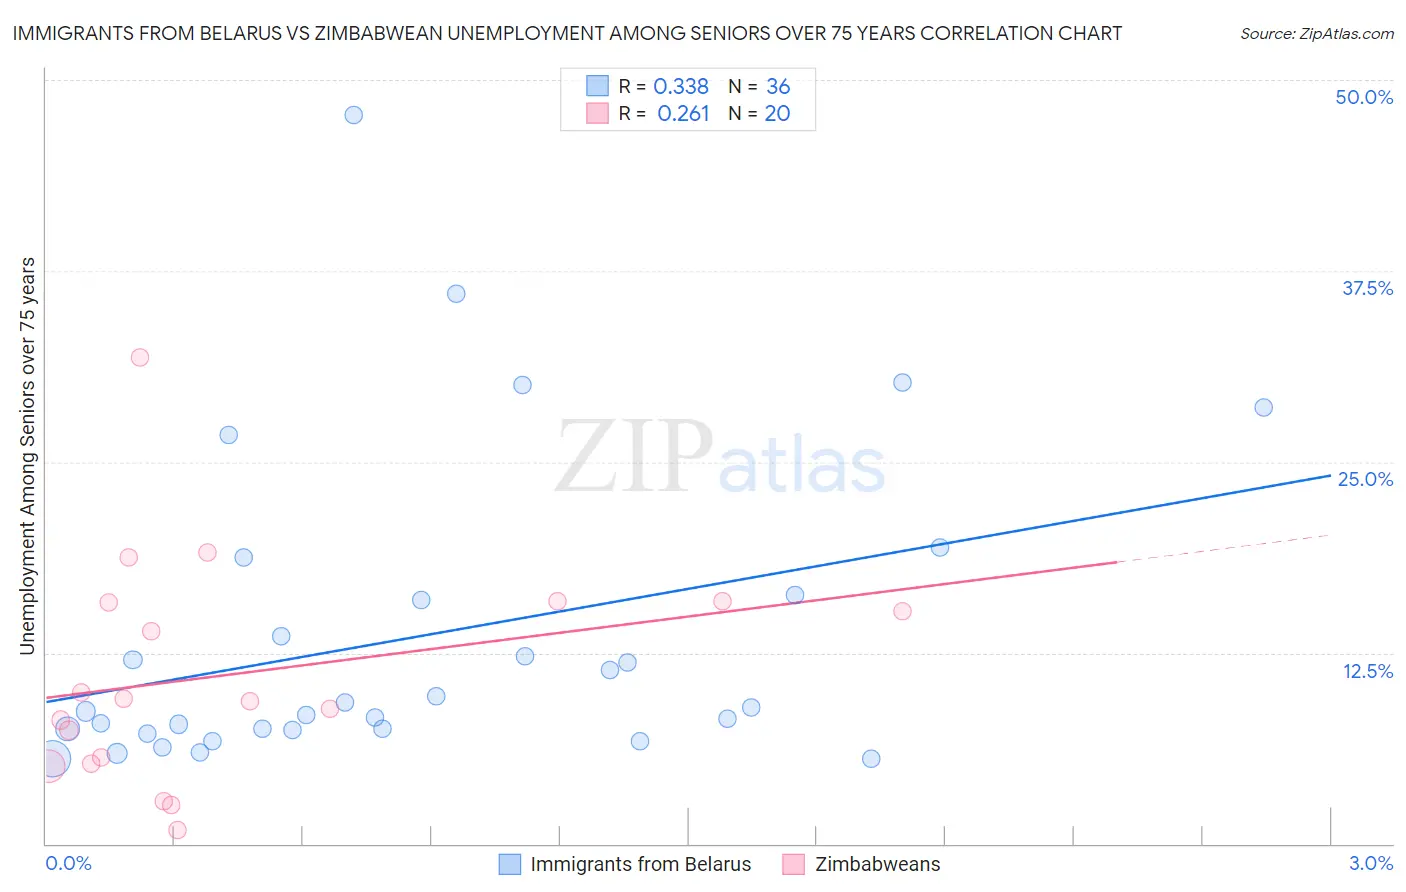 Immigrants from Belarus vs Zimbabwean Unemployment Among Seniors over 75 years